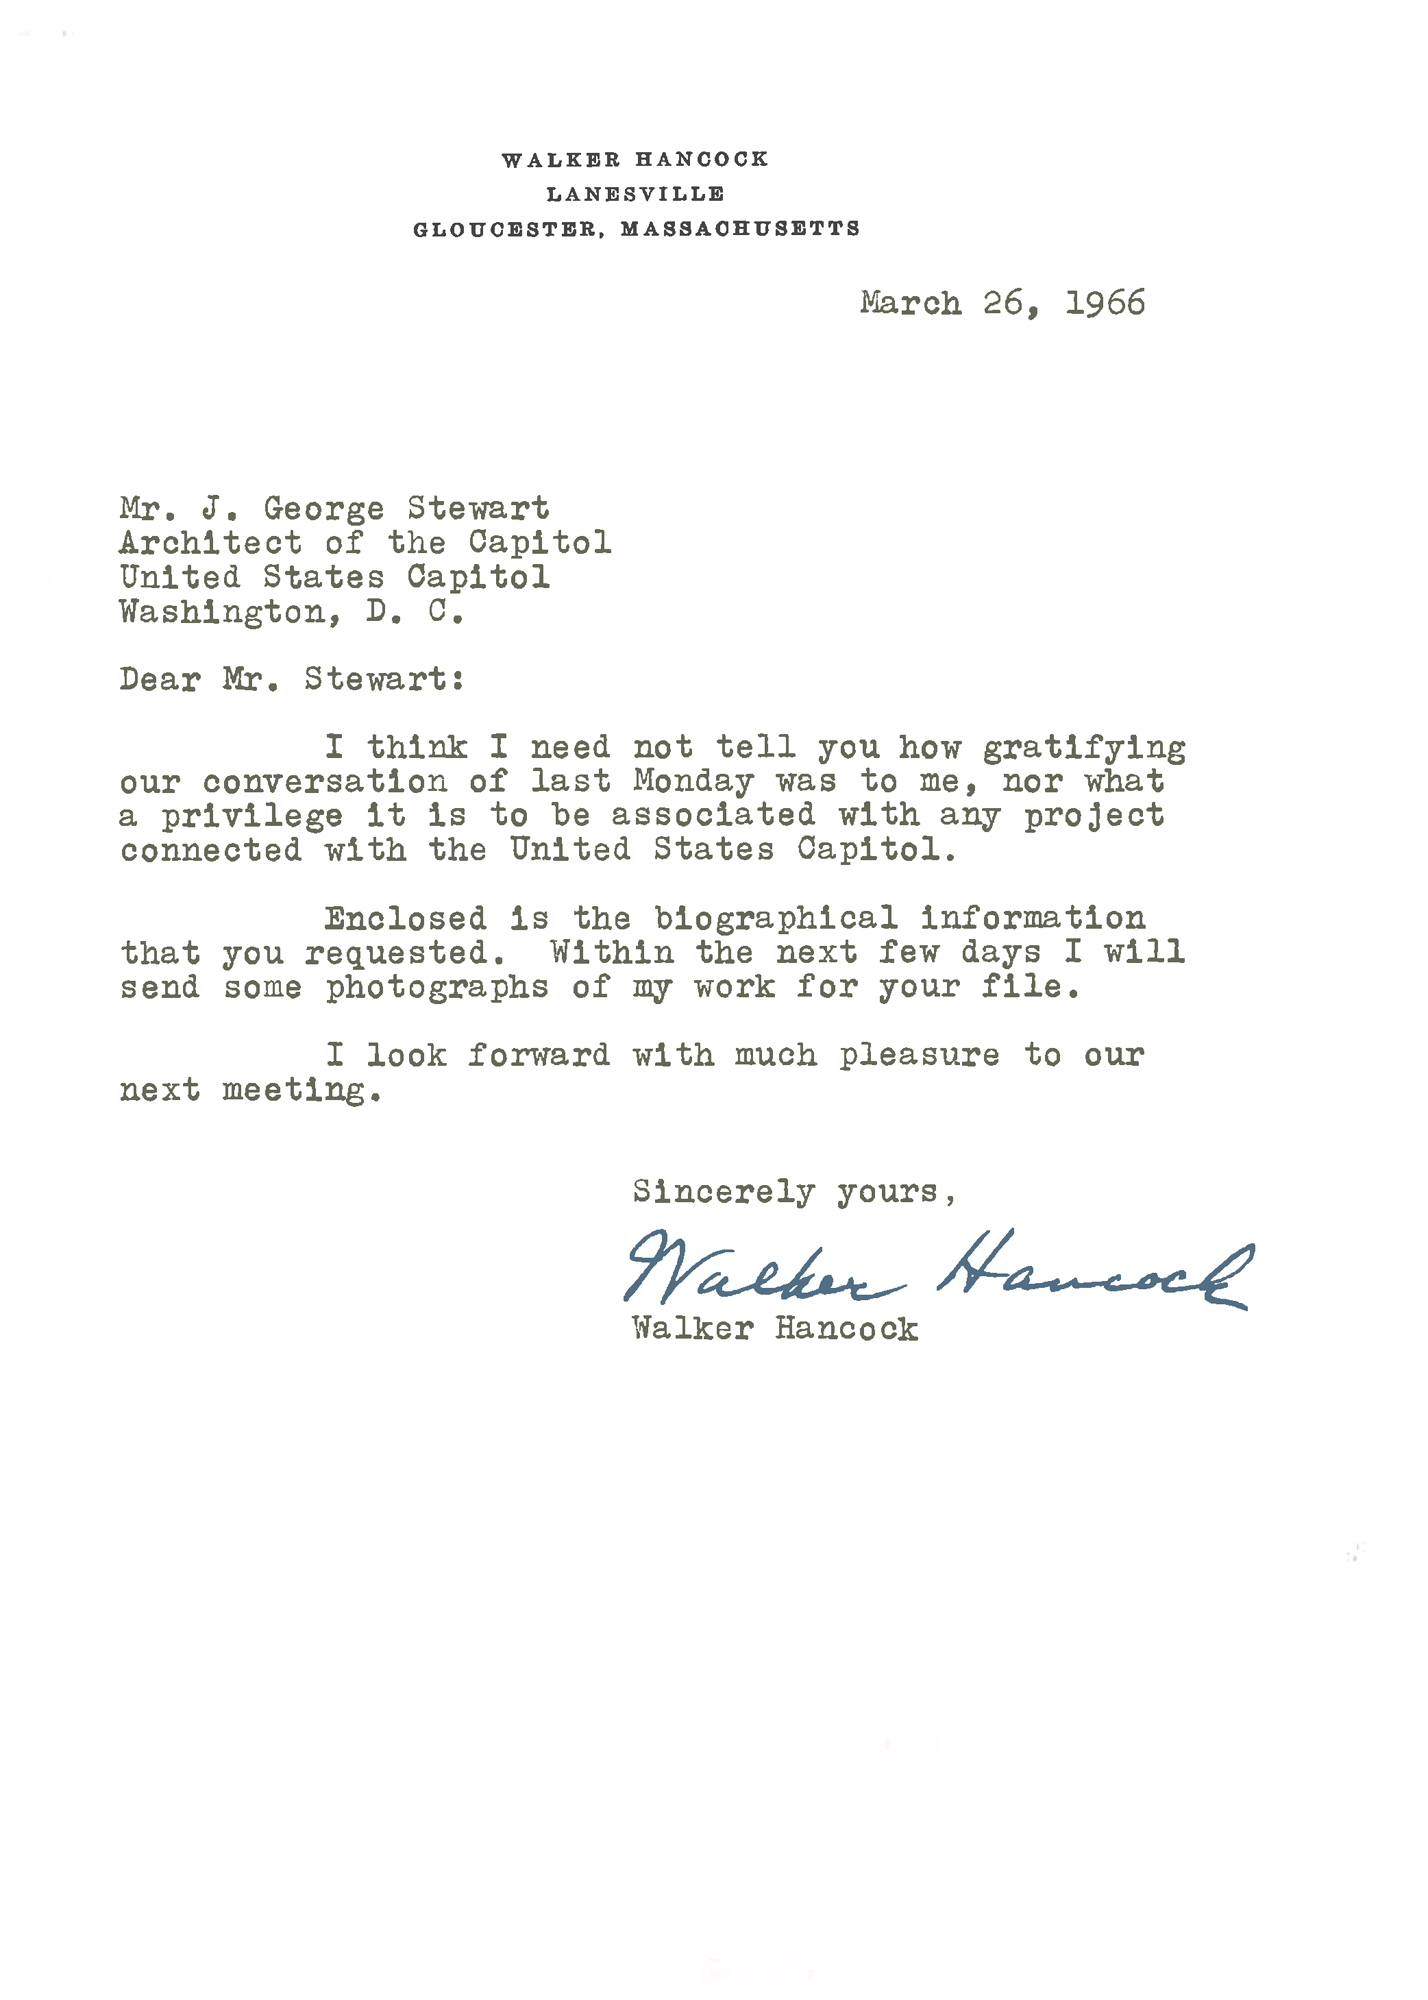 Letter from Walker Hancock to George Stewart